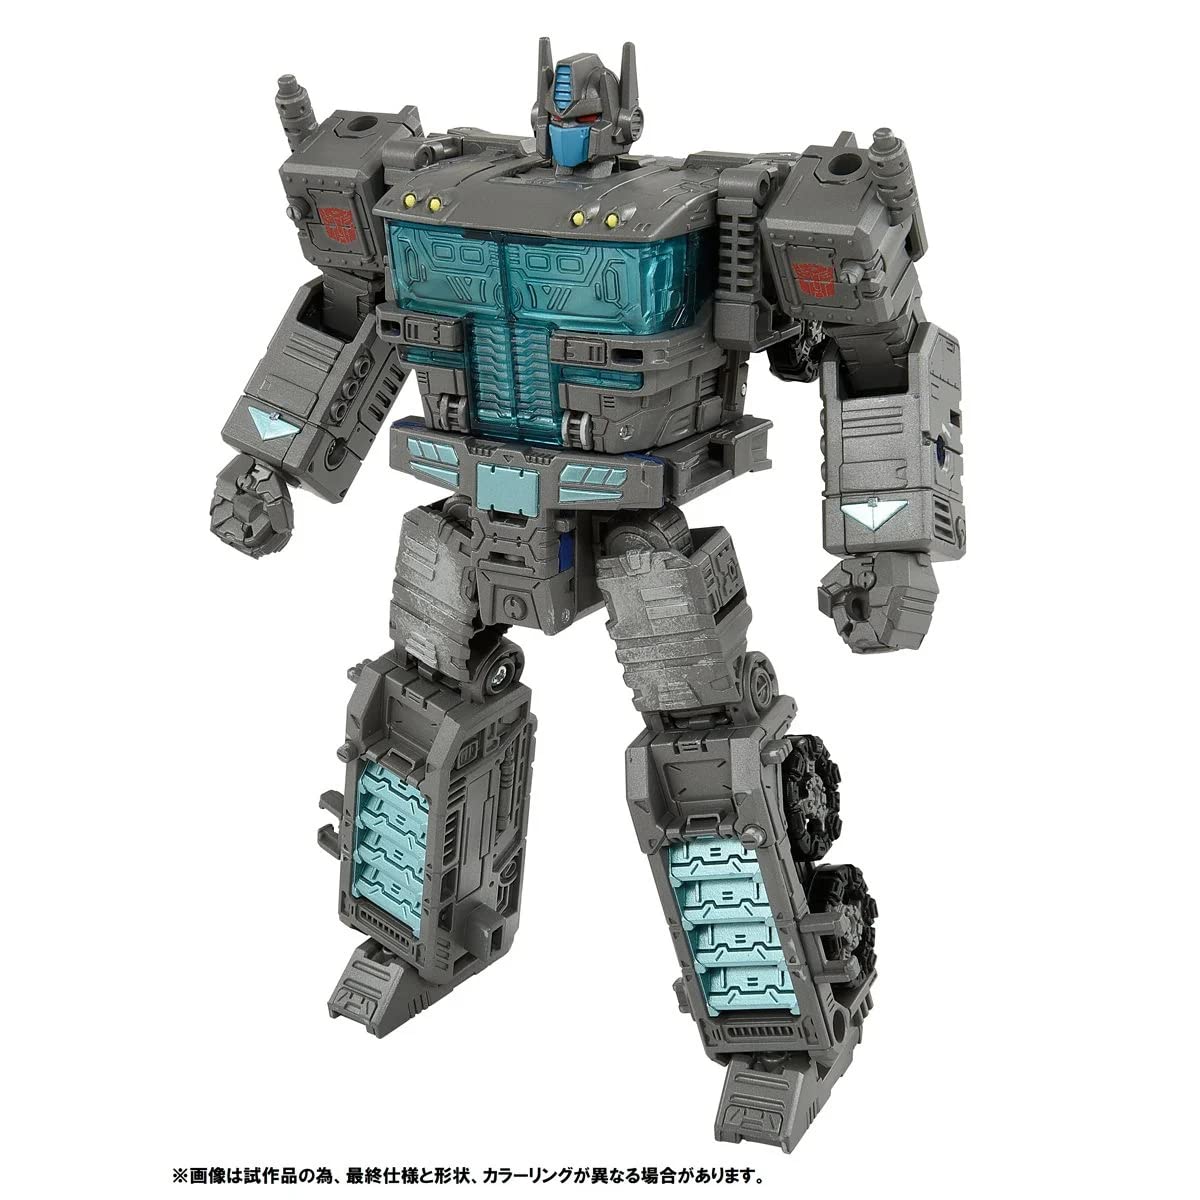 Transformers Takara Tomy Premium Finish WFC-03 Leader Ultra Magnus Action Figure